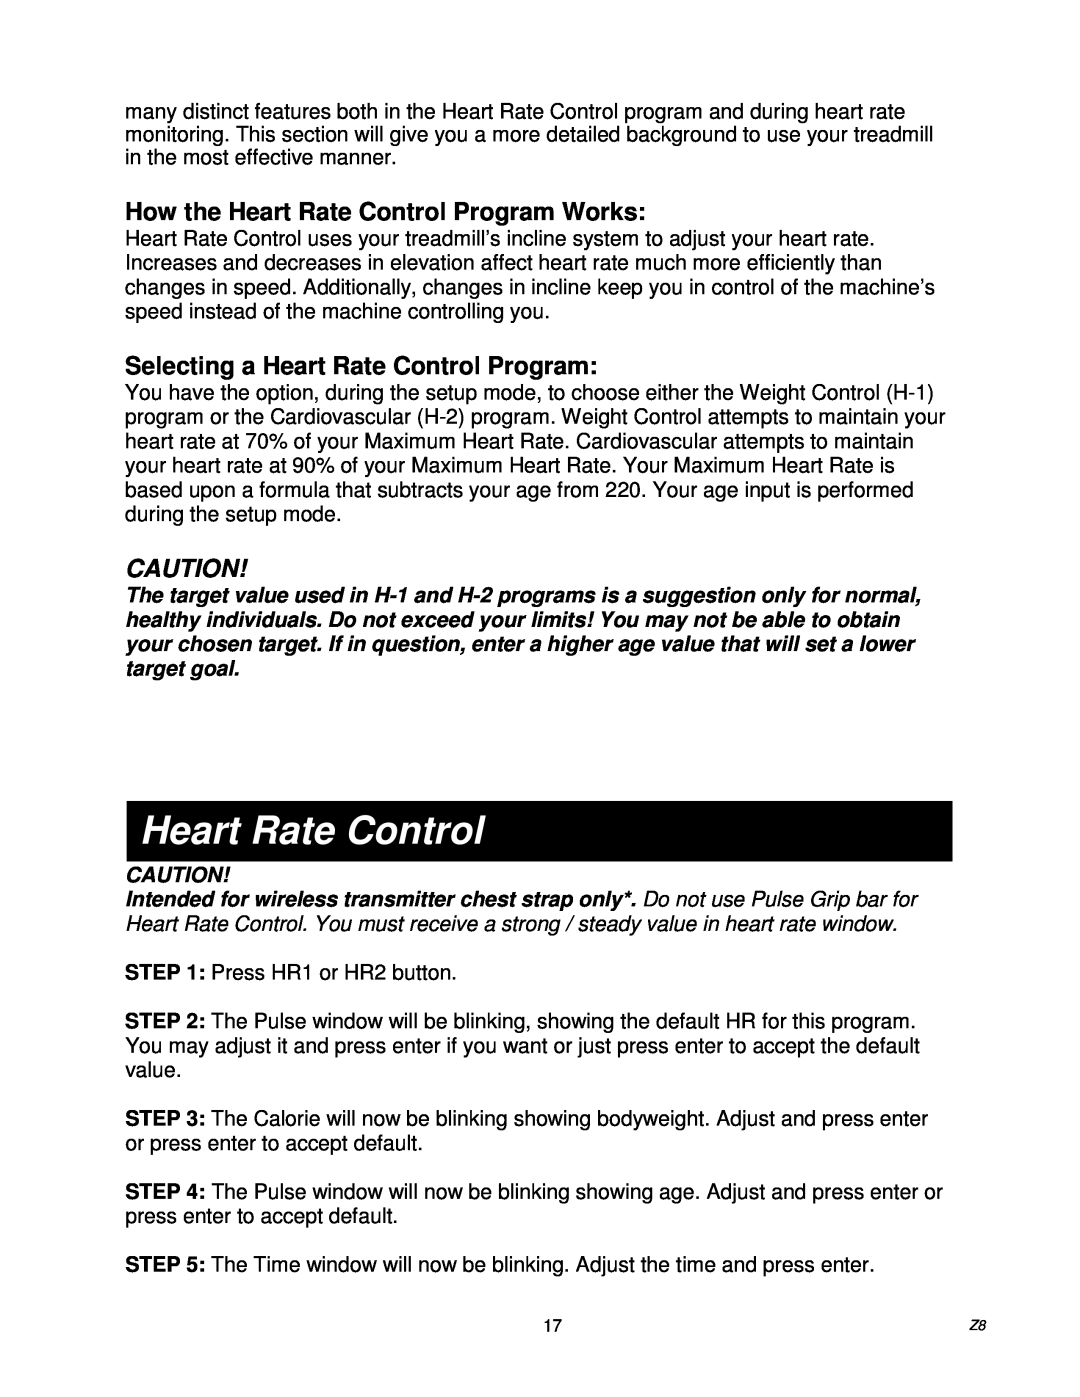 Spirit Z100, Z700, Z500, Z300 How the Heart Rate Control Program Works, Selecting a Heart Rate Control Program 